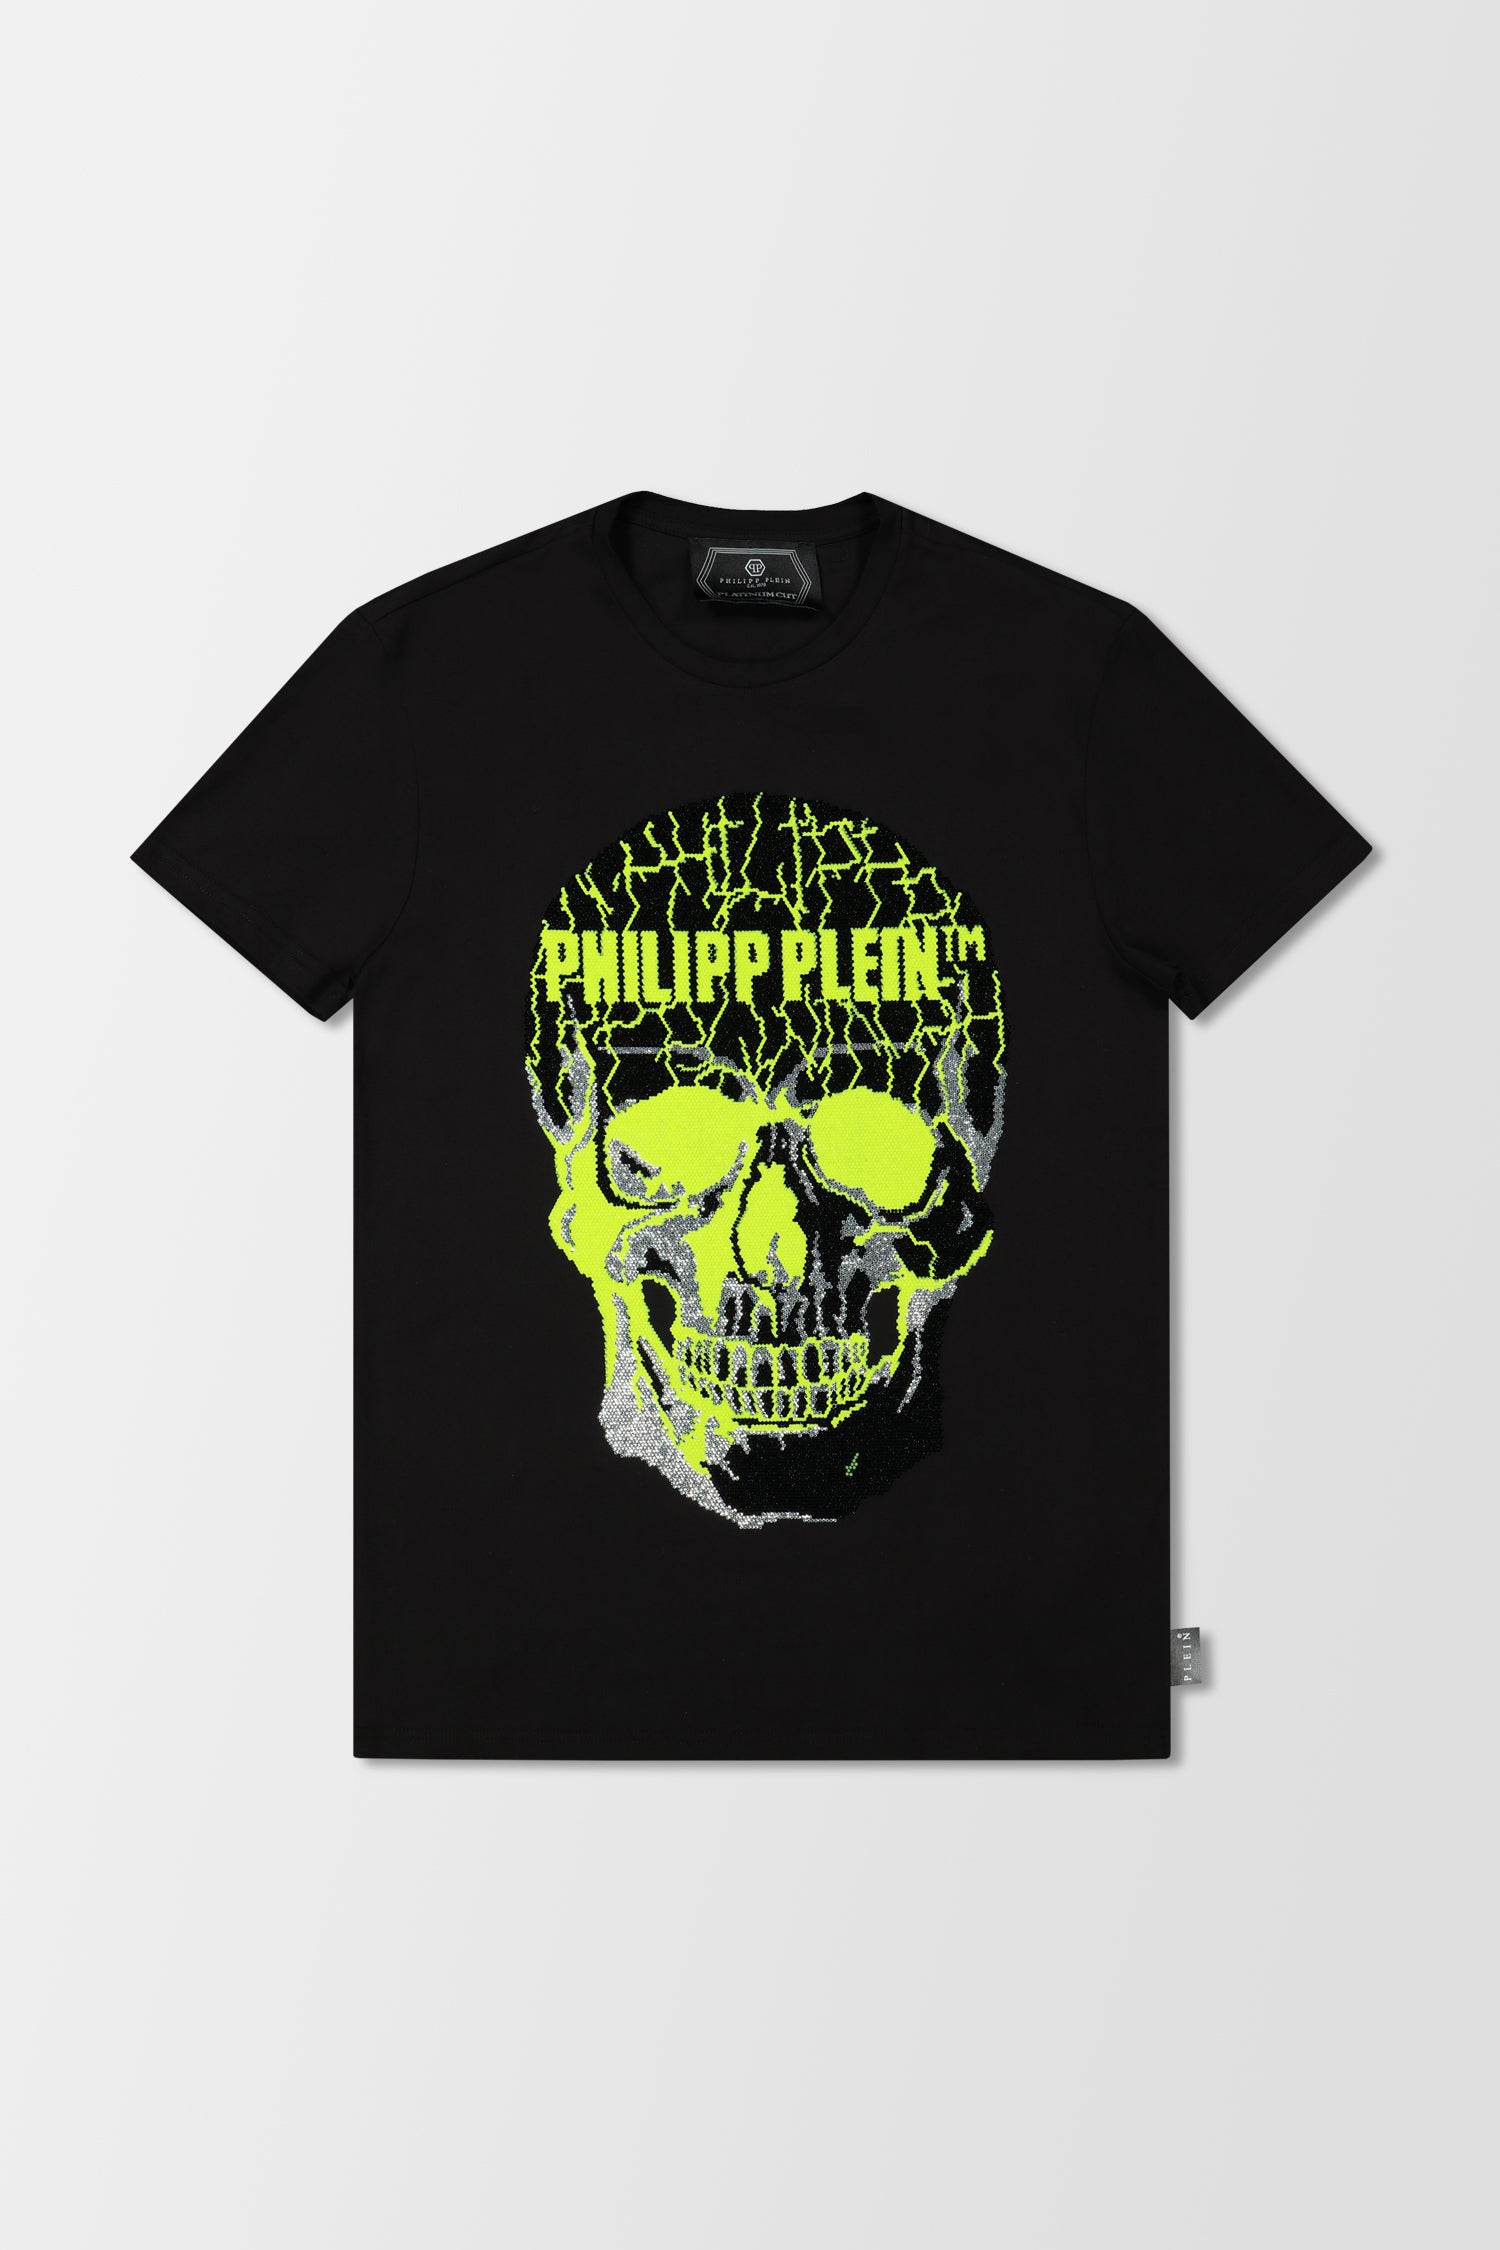 Philipp Plein Black/Yellow Round Neck Skull T-Shirt